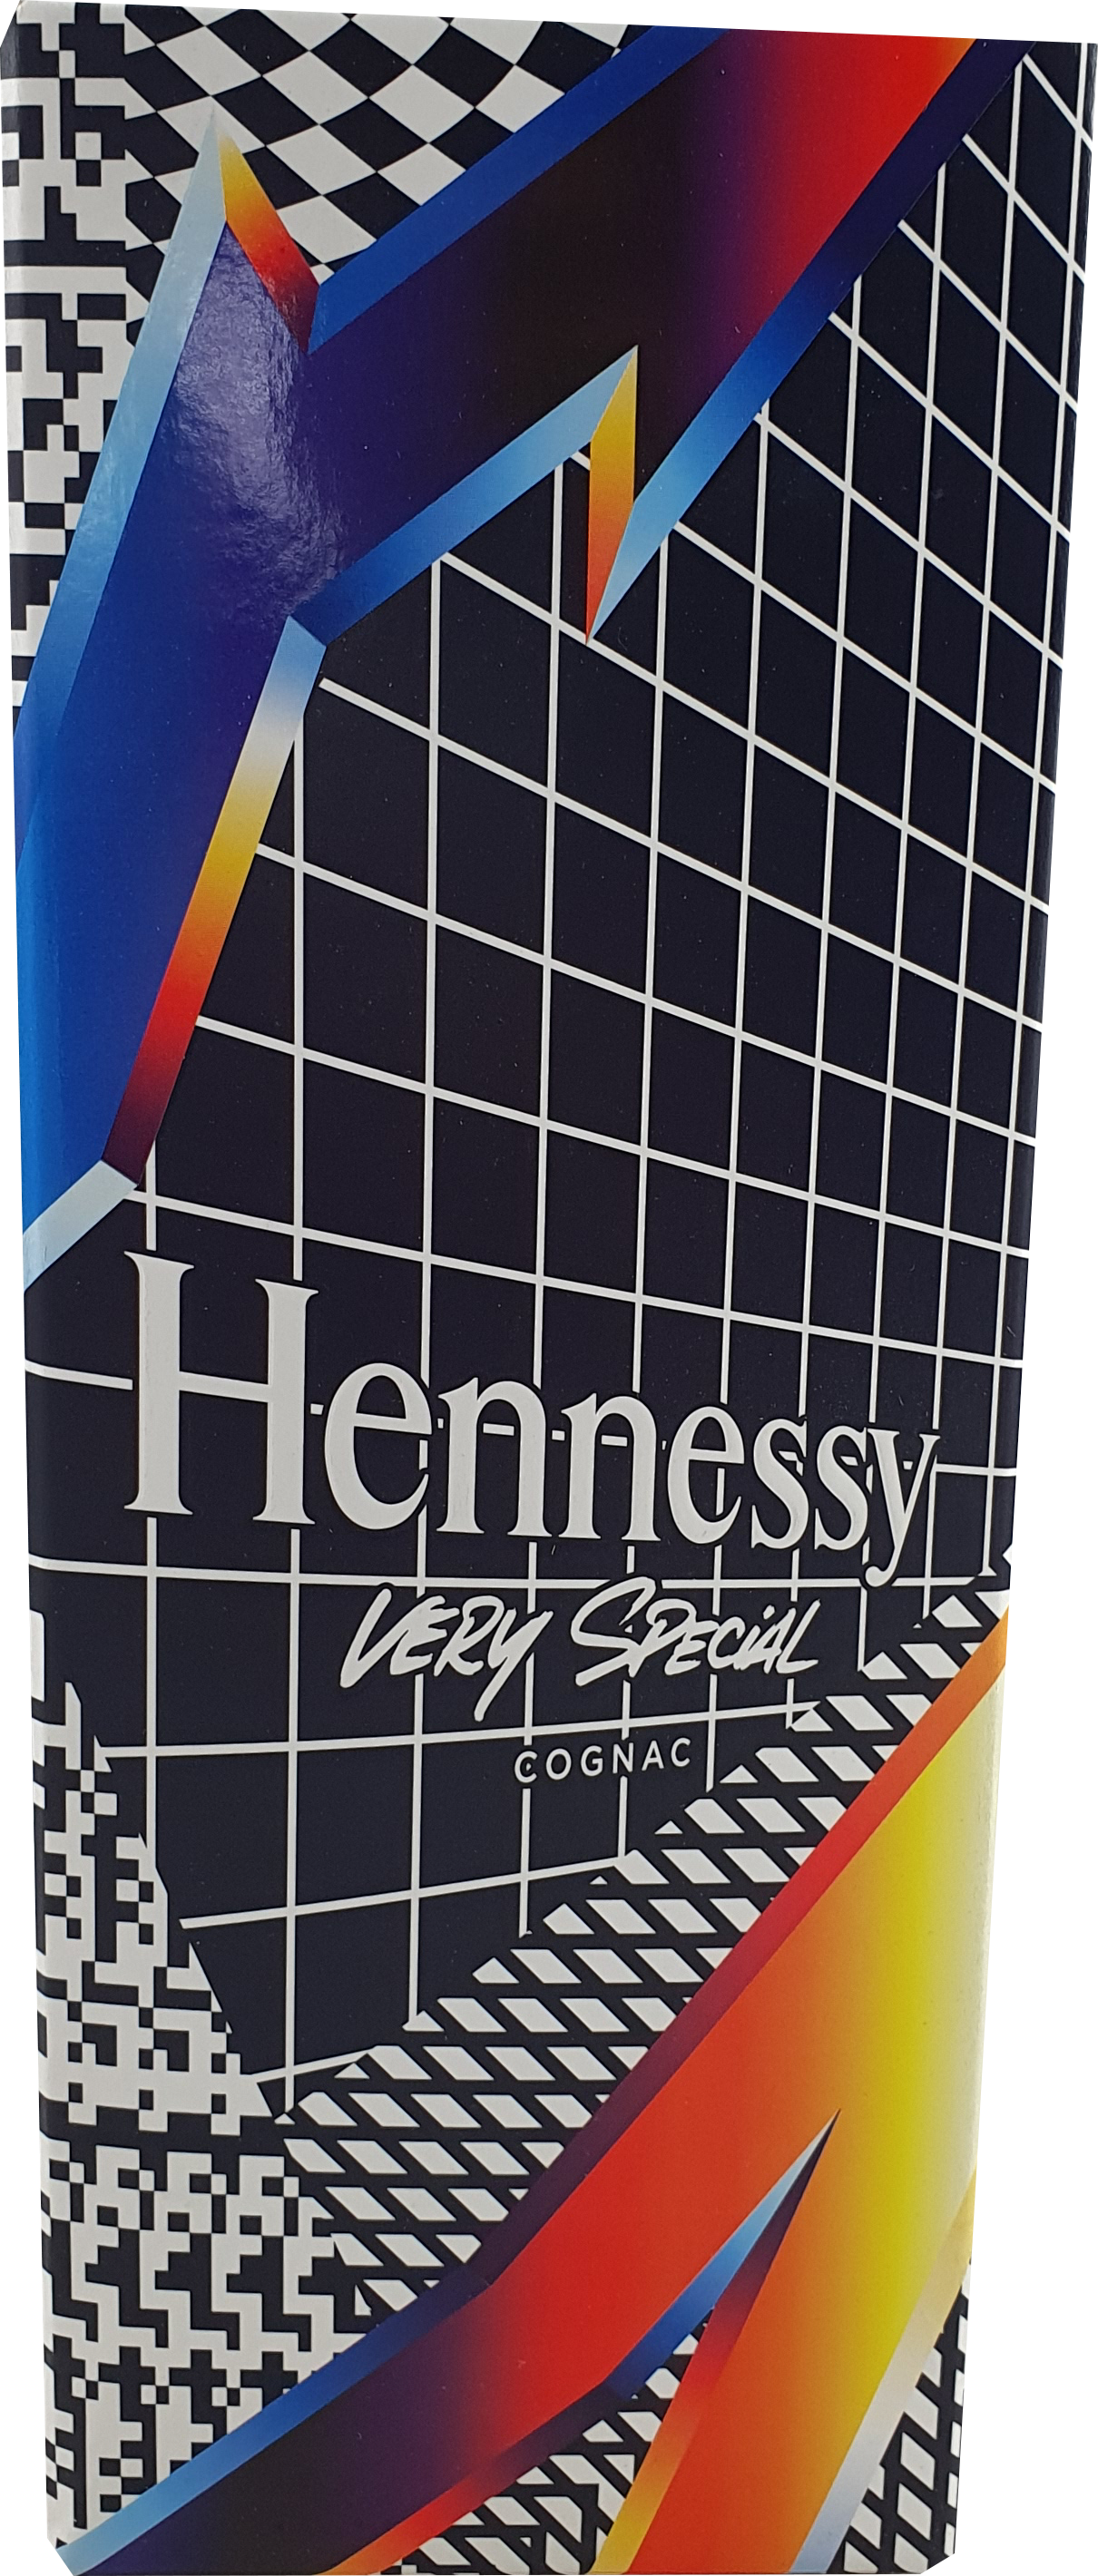 Hennessy VS Felipe Pantone lim. Edit. 0,7L